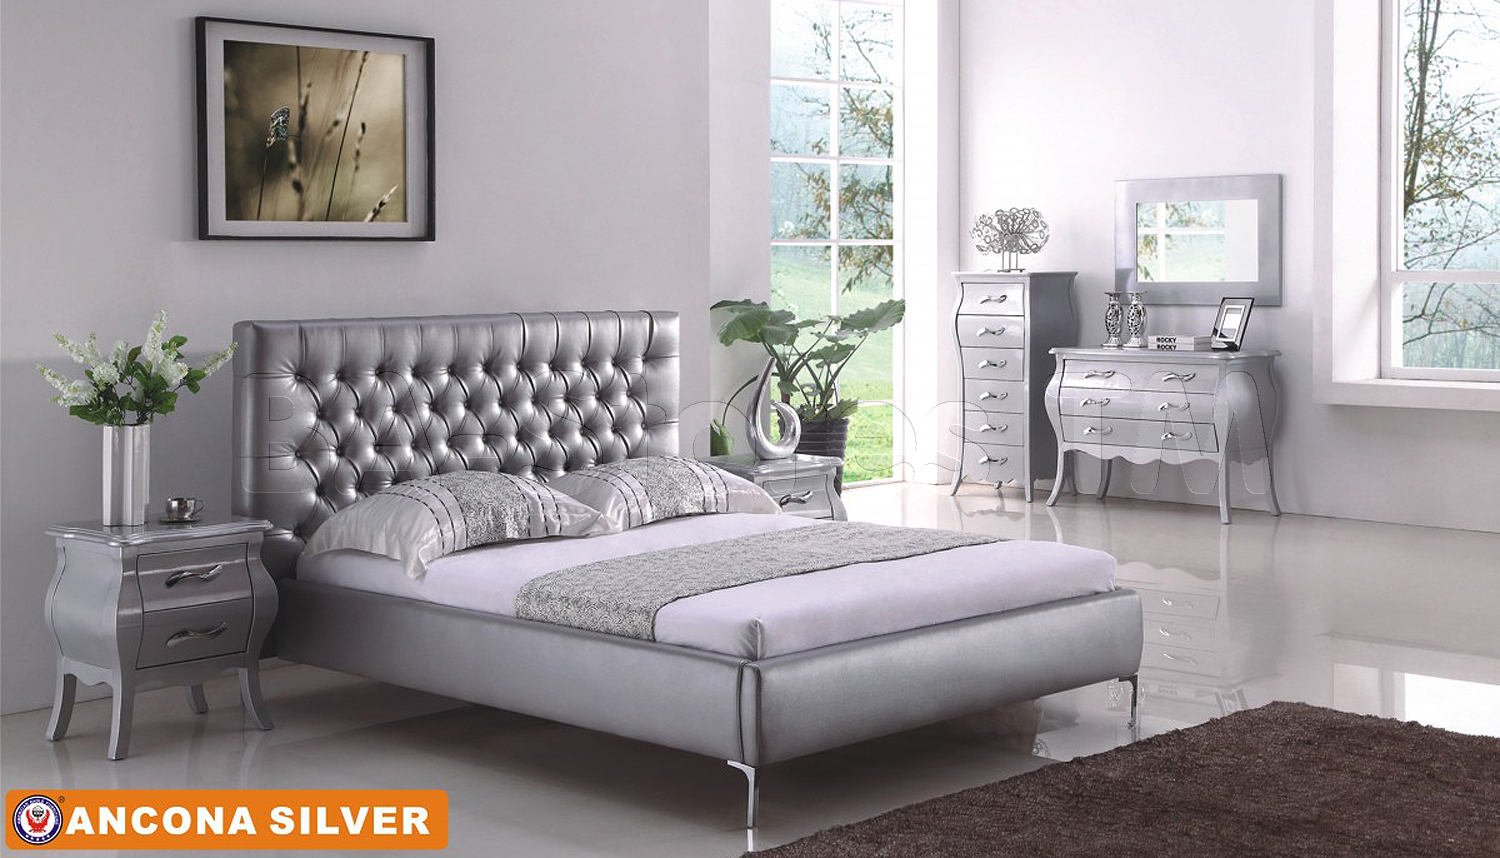 silver bedroom furniture sets photo - 4